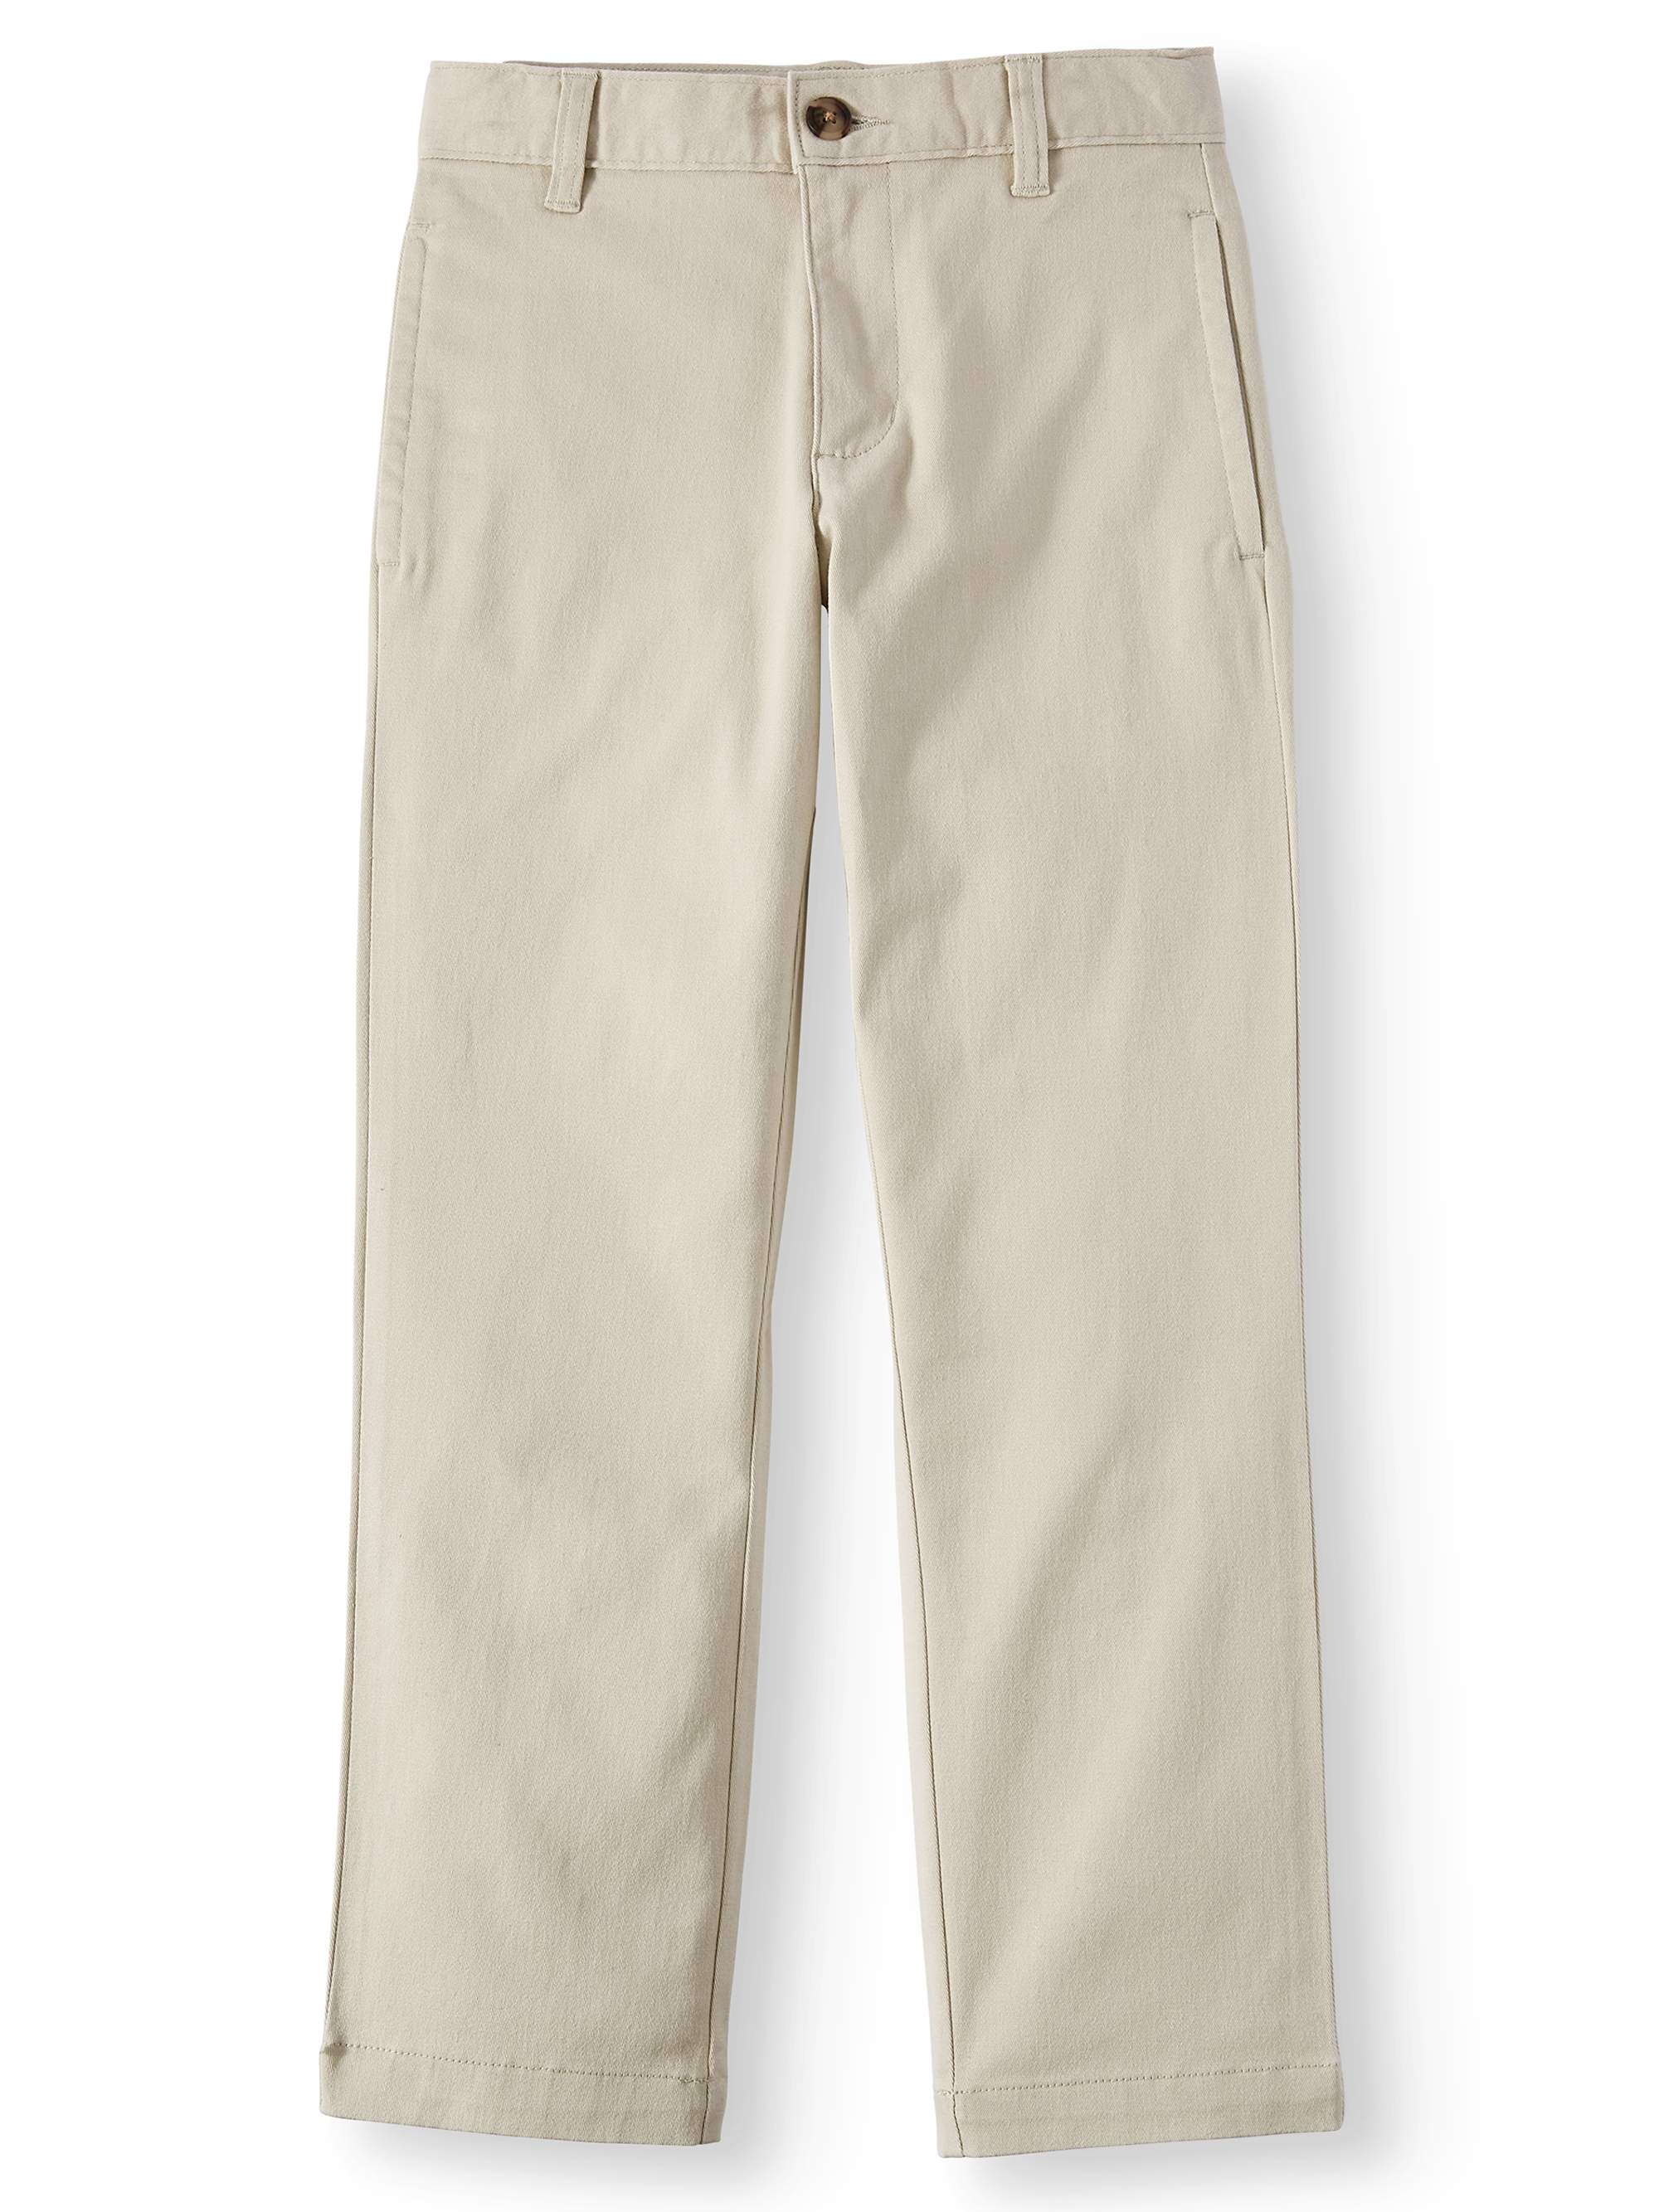 Details about  / Wonder Nation Boys School Uniform Twill Chino Pants w// Scotchguard size 14